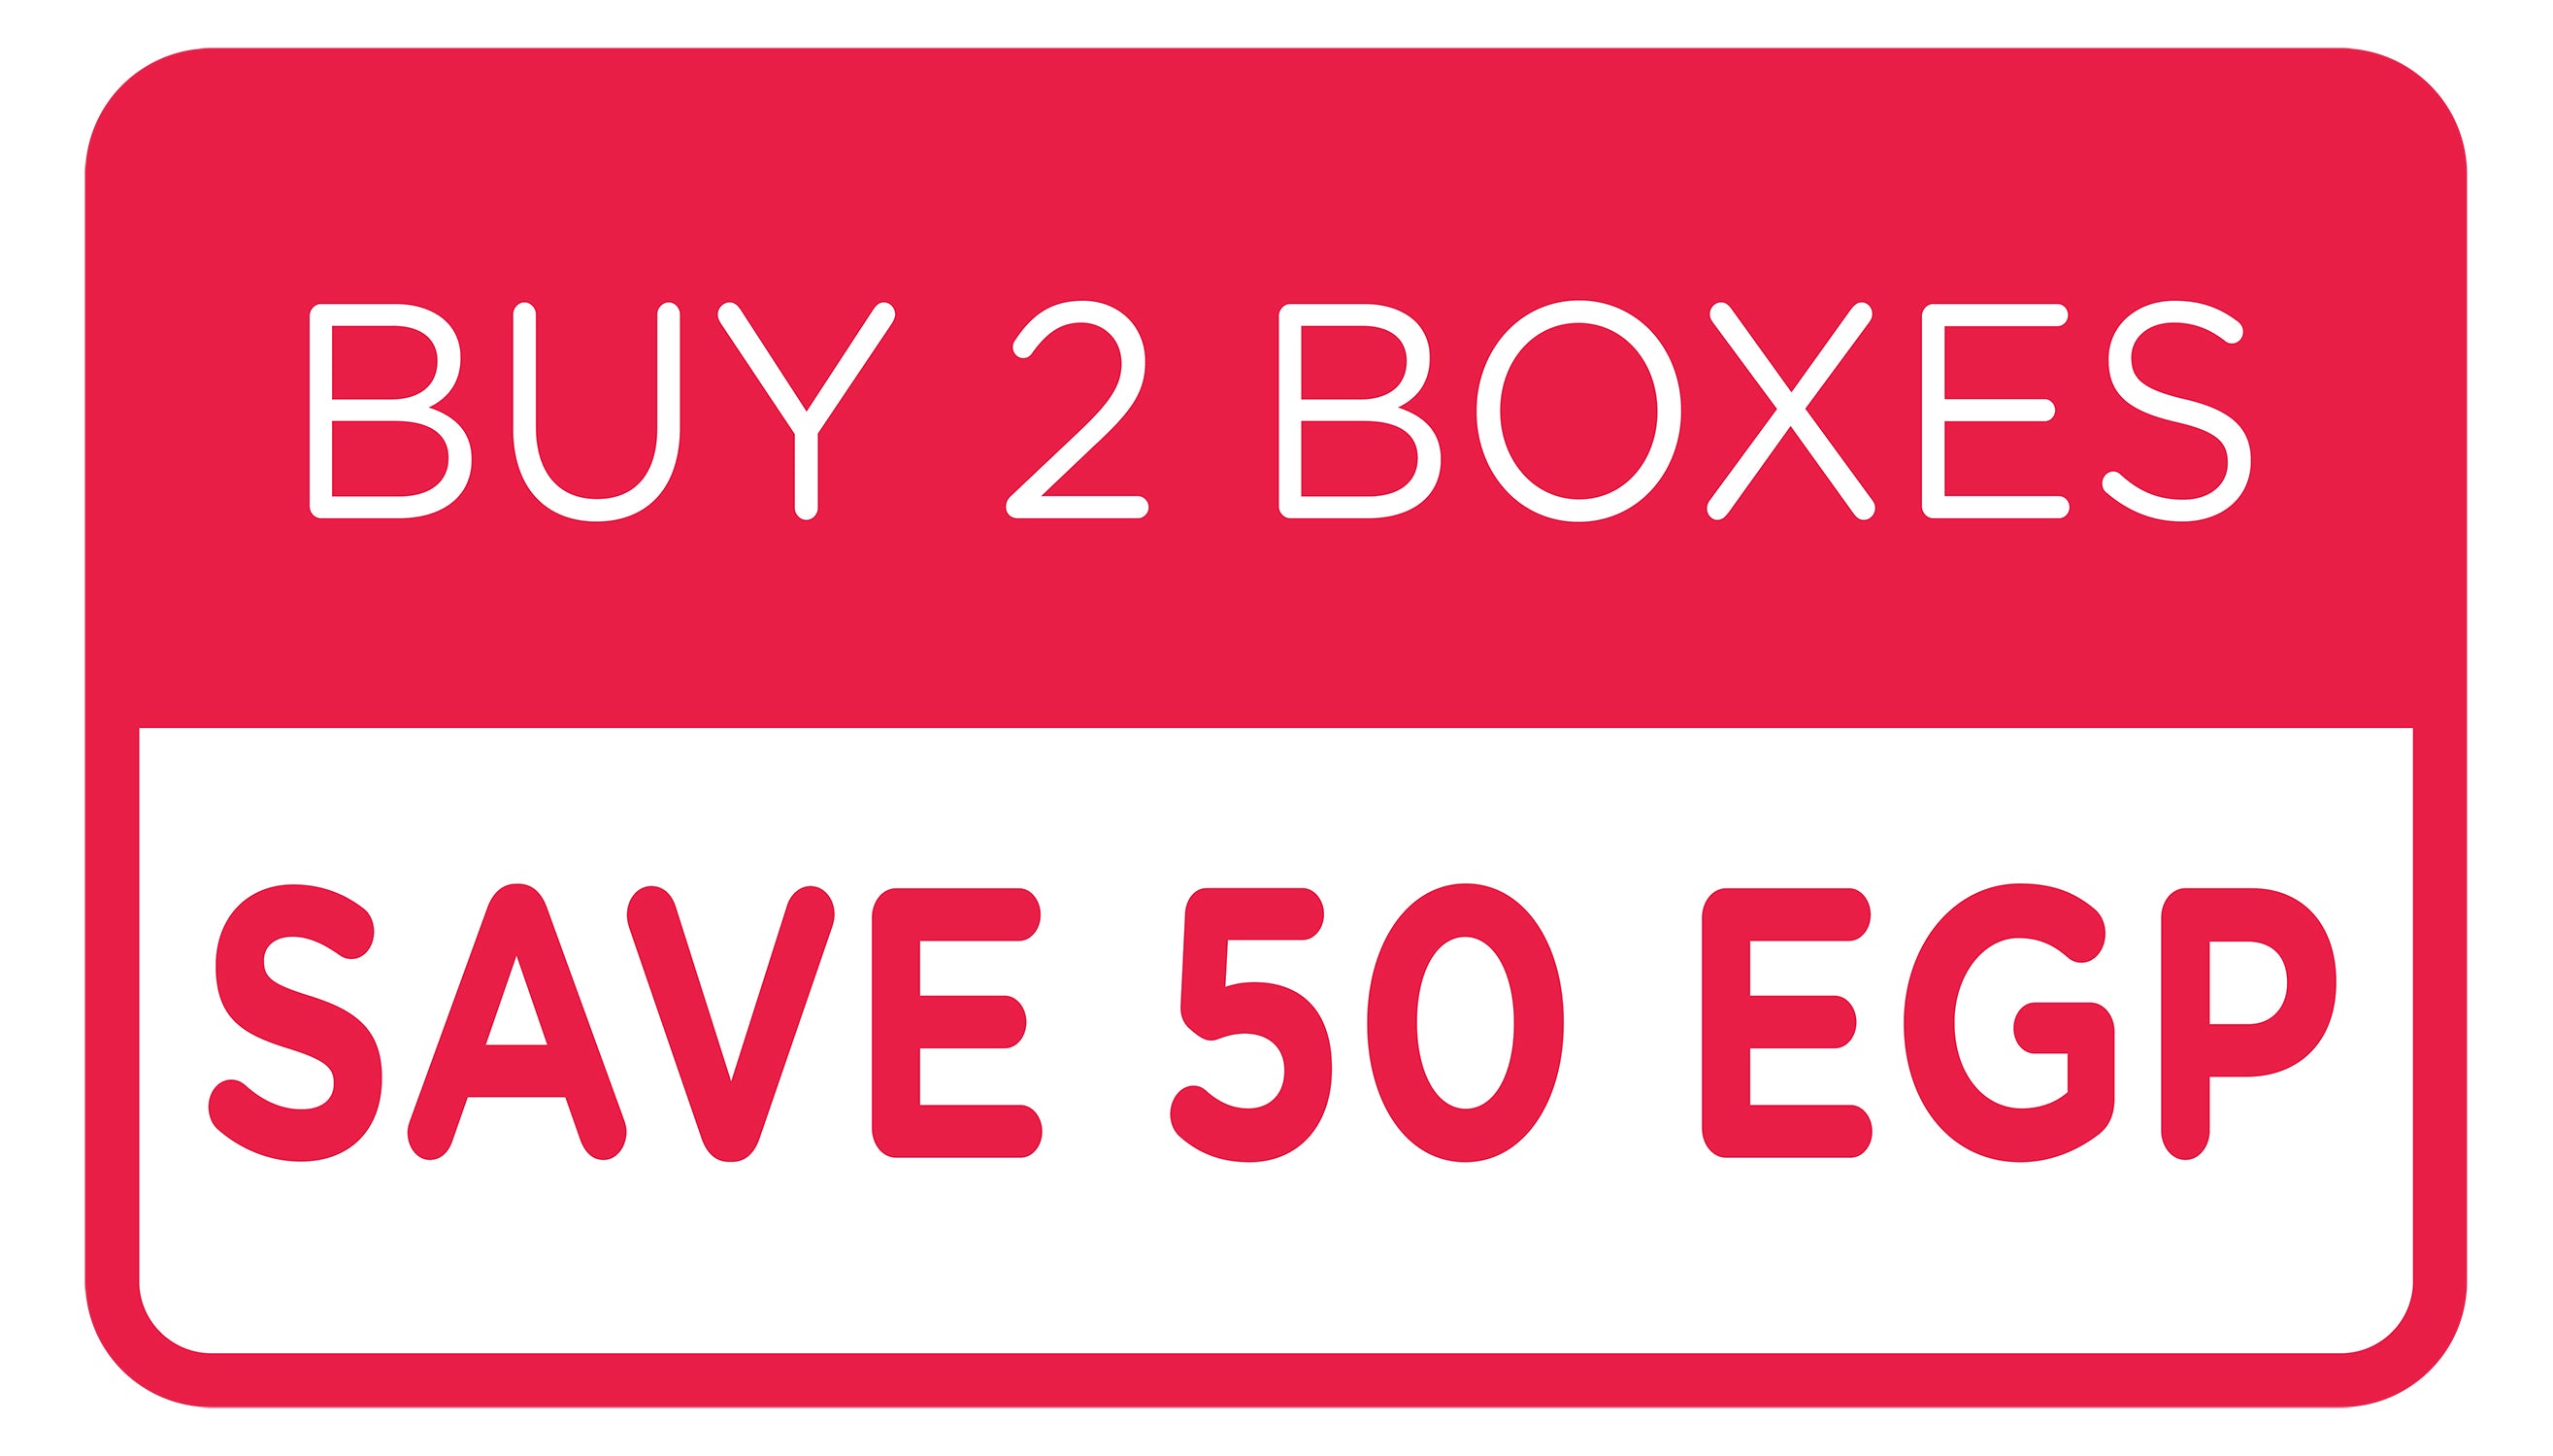 Buy 2 Boxes Save EGP 50